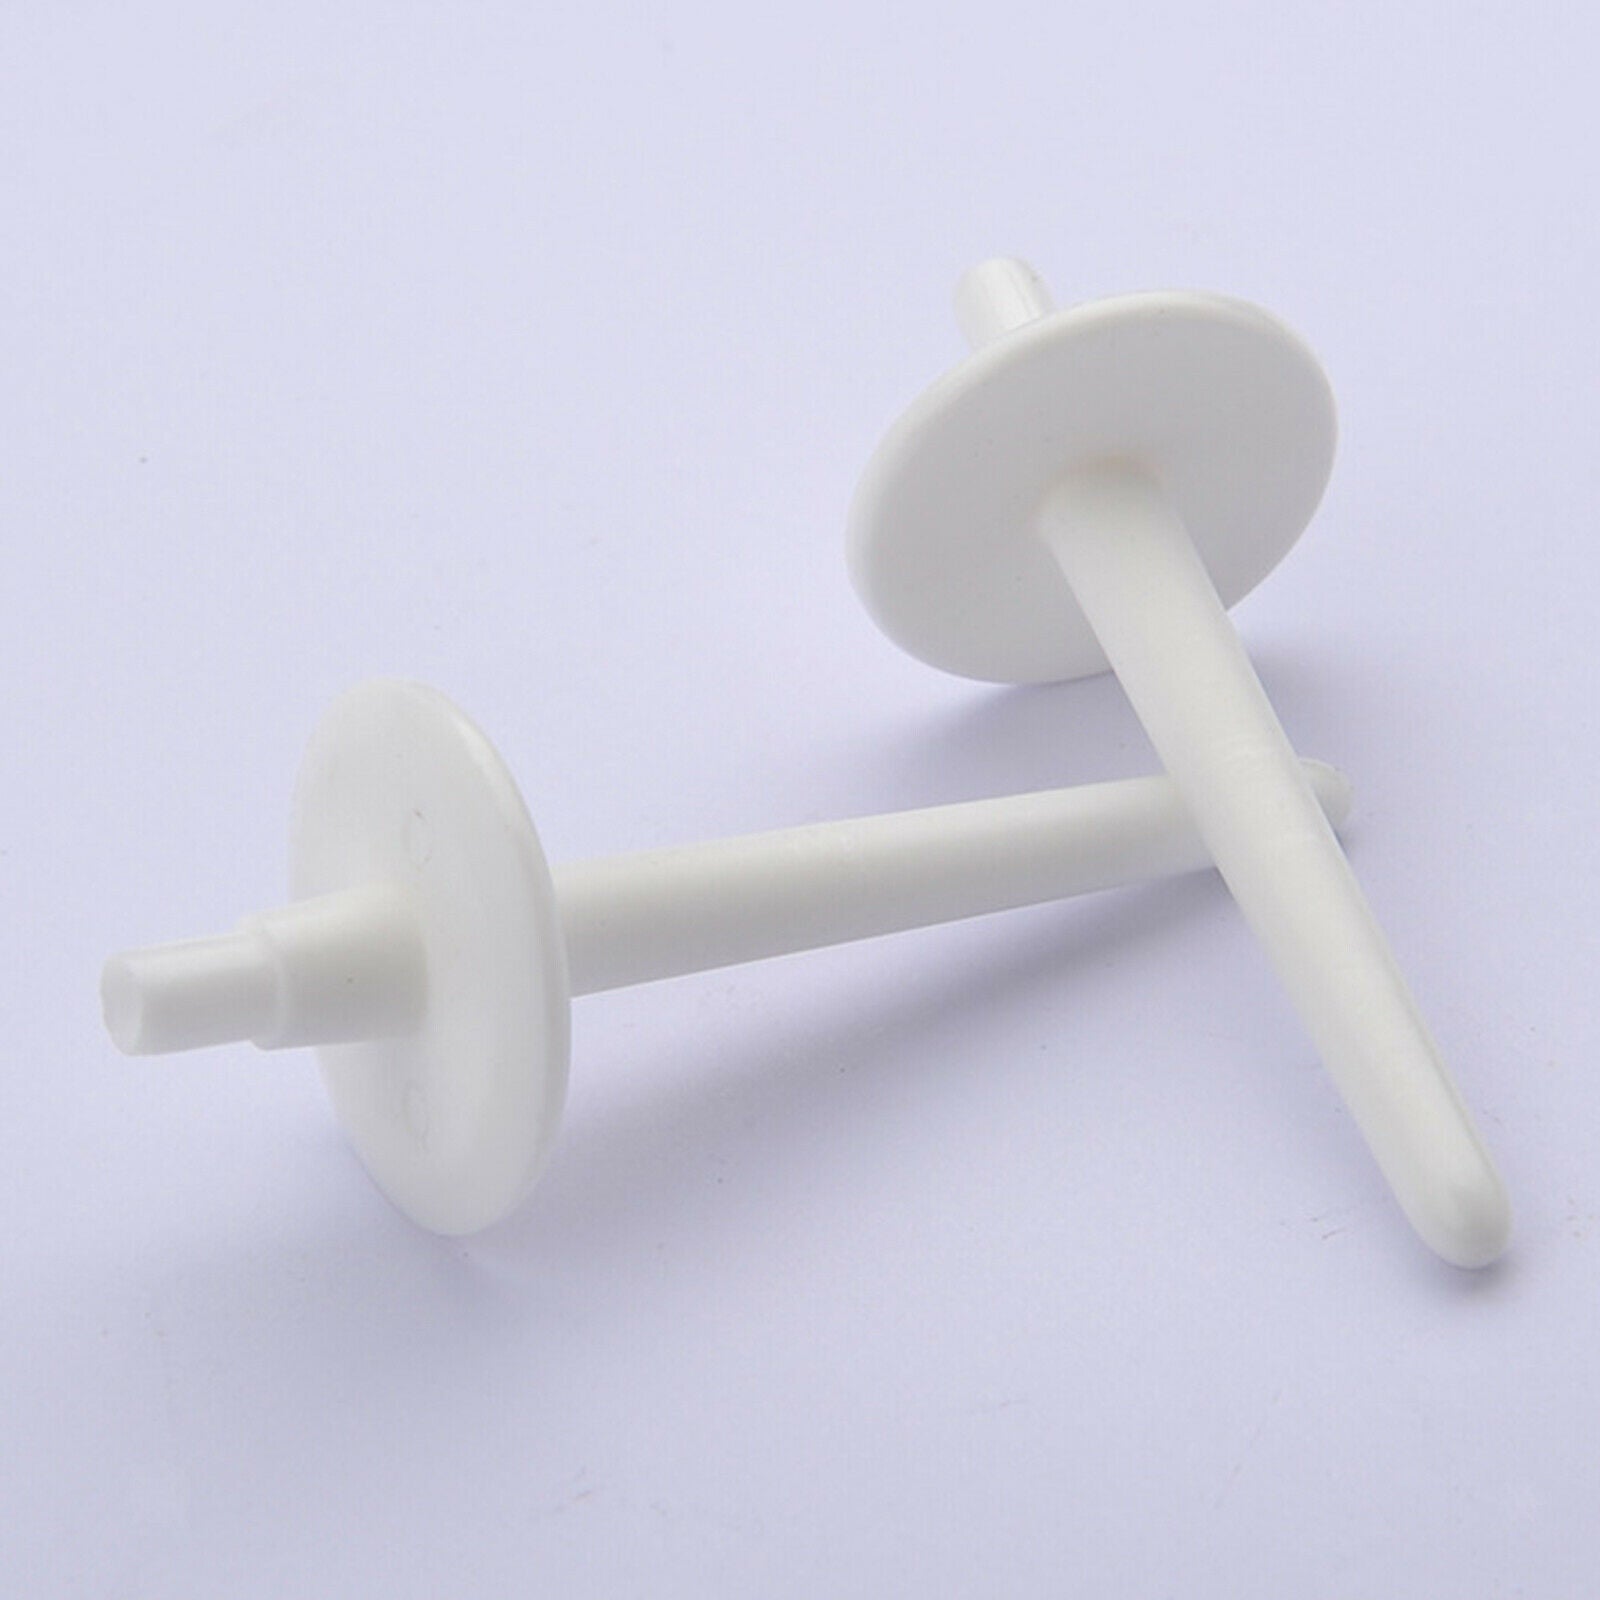 10 Pieces Sewing Machine Spool Pins Stand Bobbin Winder Bobbins Accessories